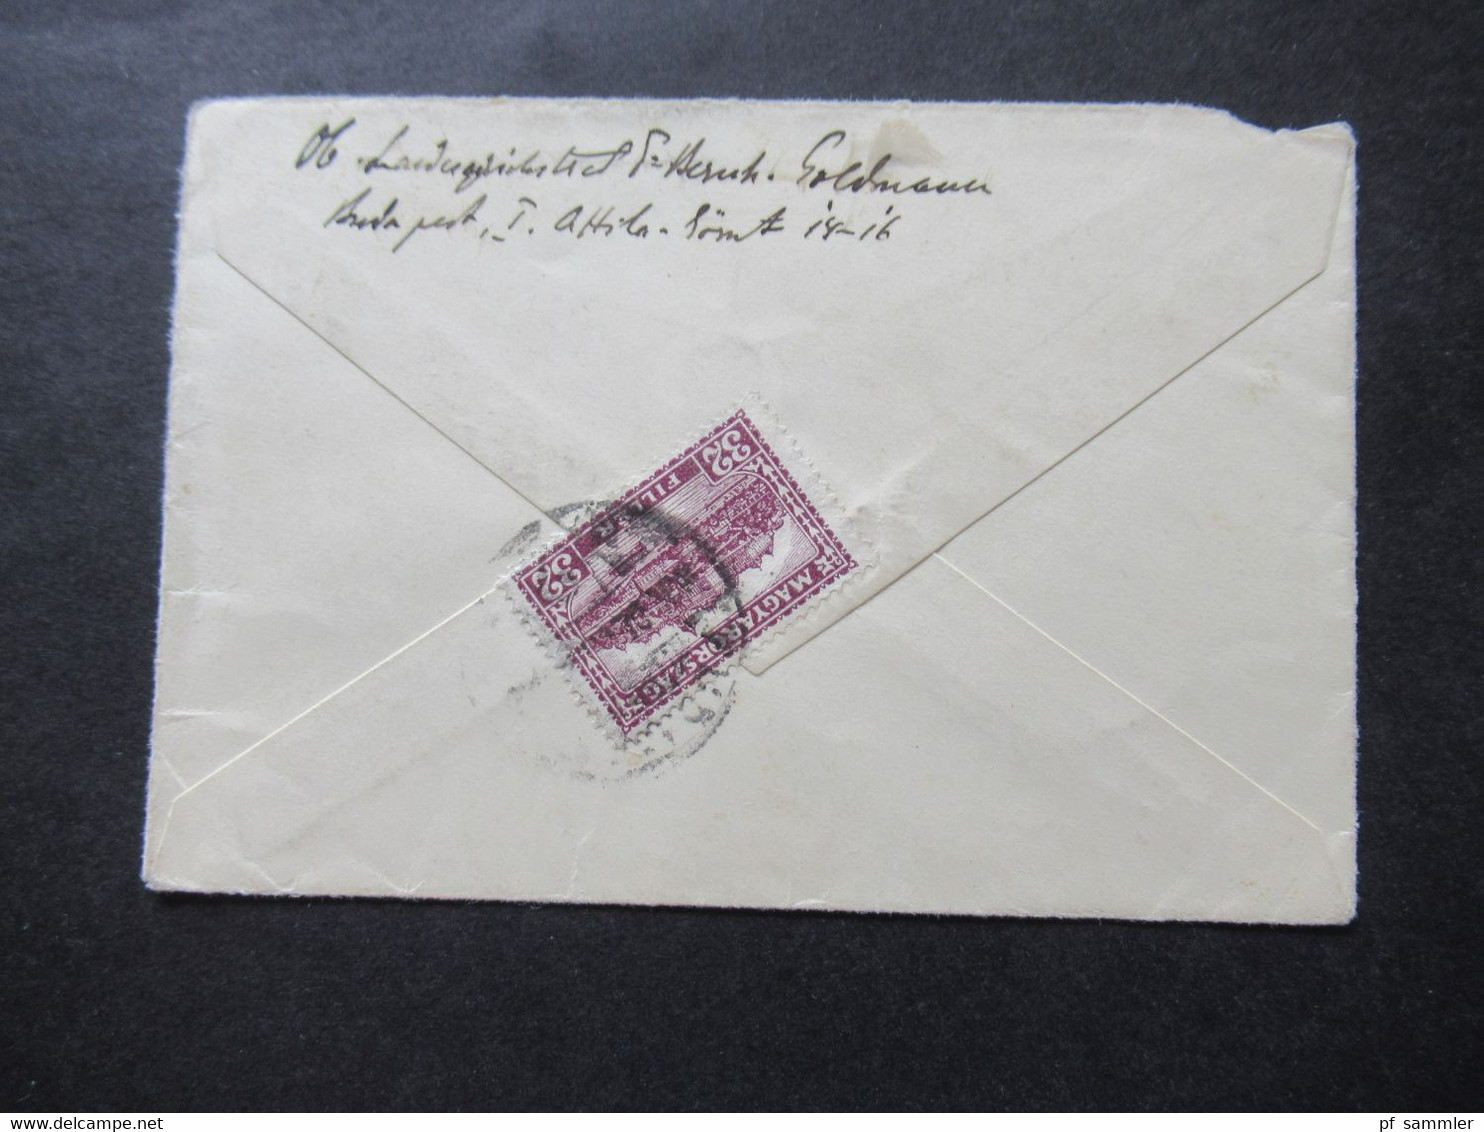 Ungarn 1923 Budapest - Berlin Friedenau Absender Oberlandesgerichtsrat F. Goldmann 2 Belege - Briefe U. Dokumente